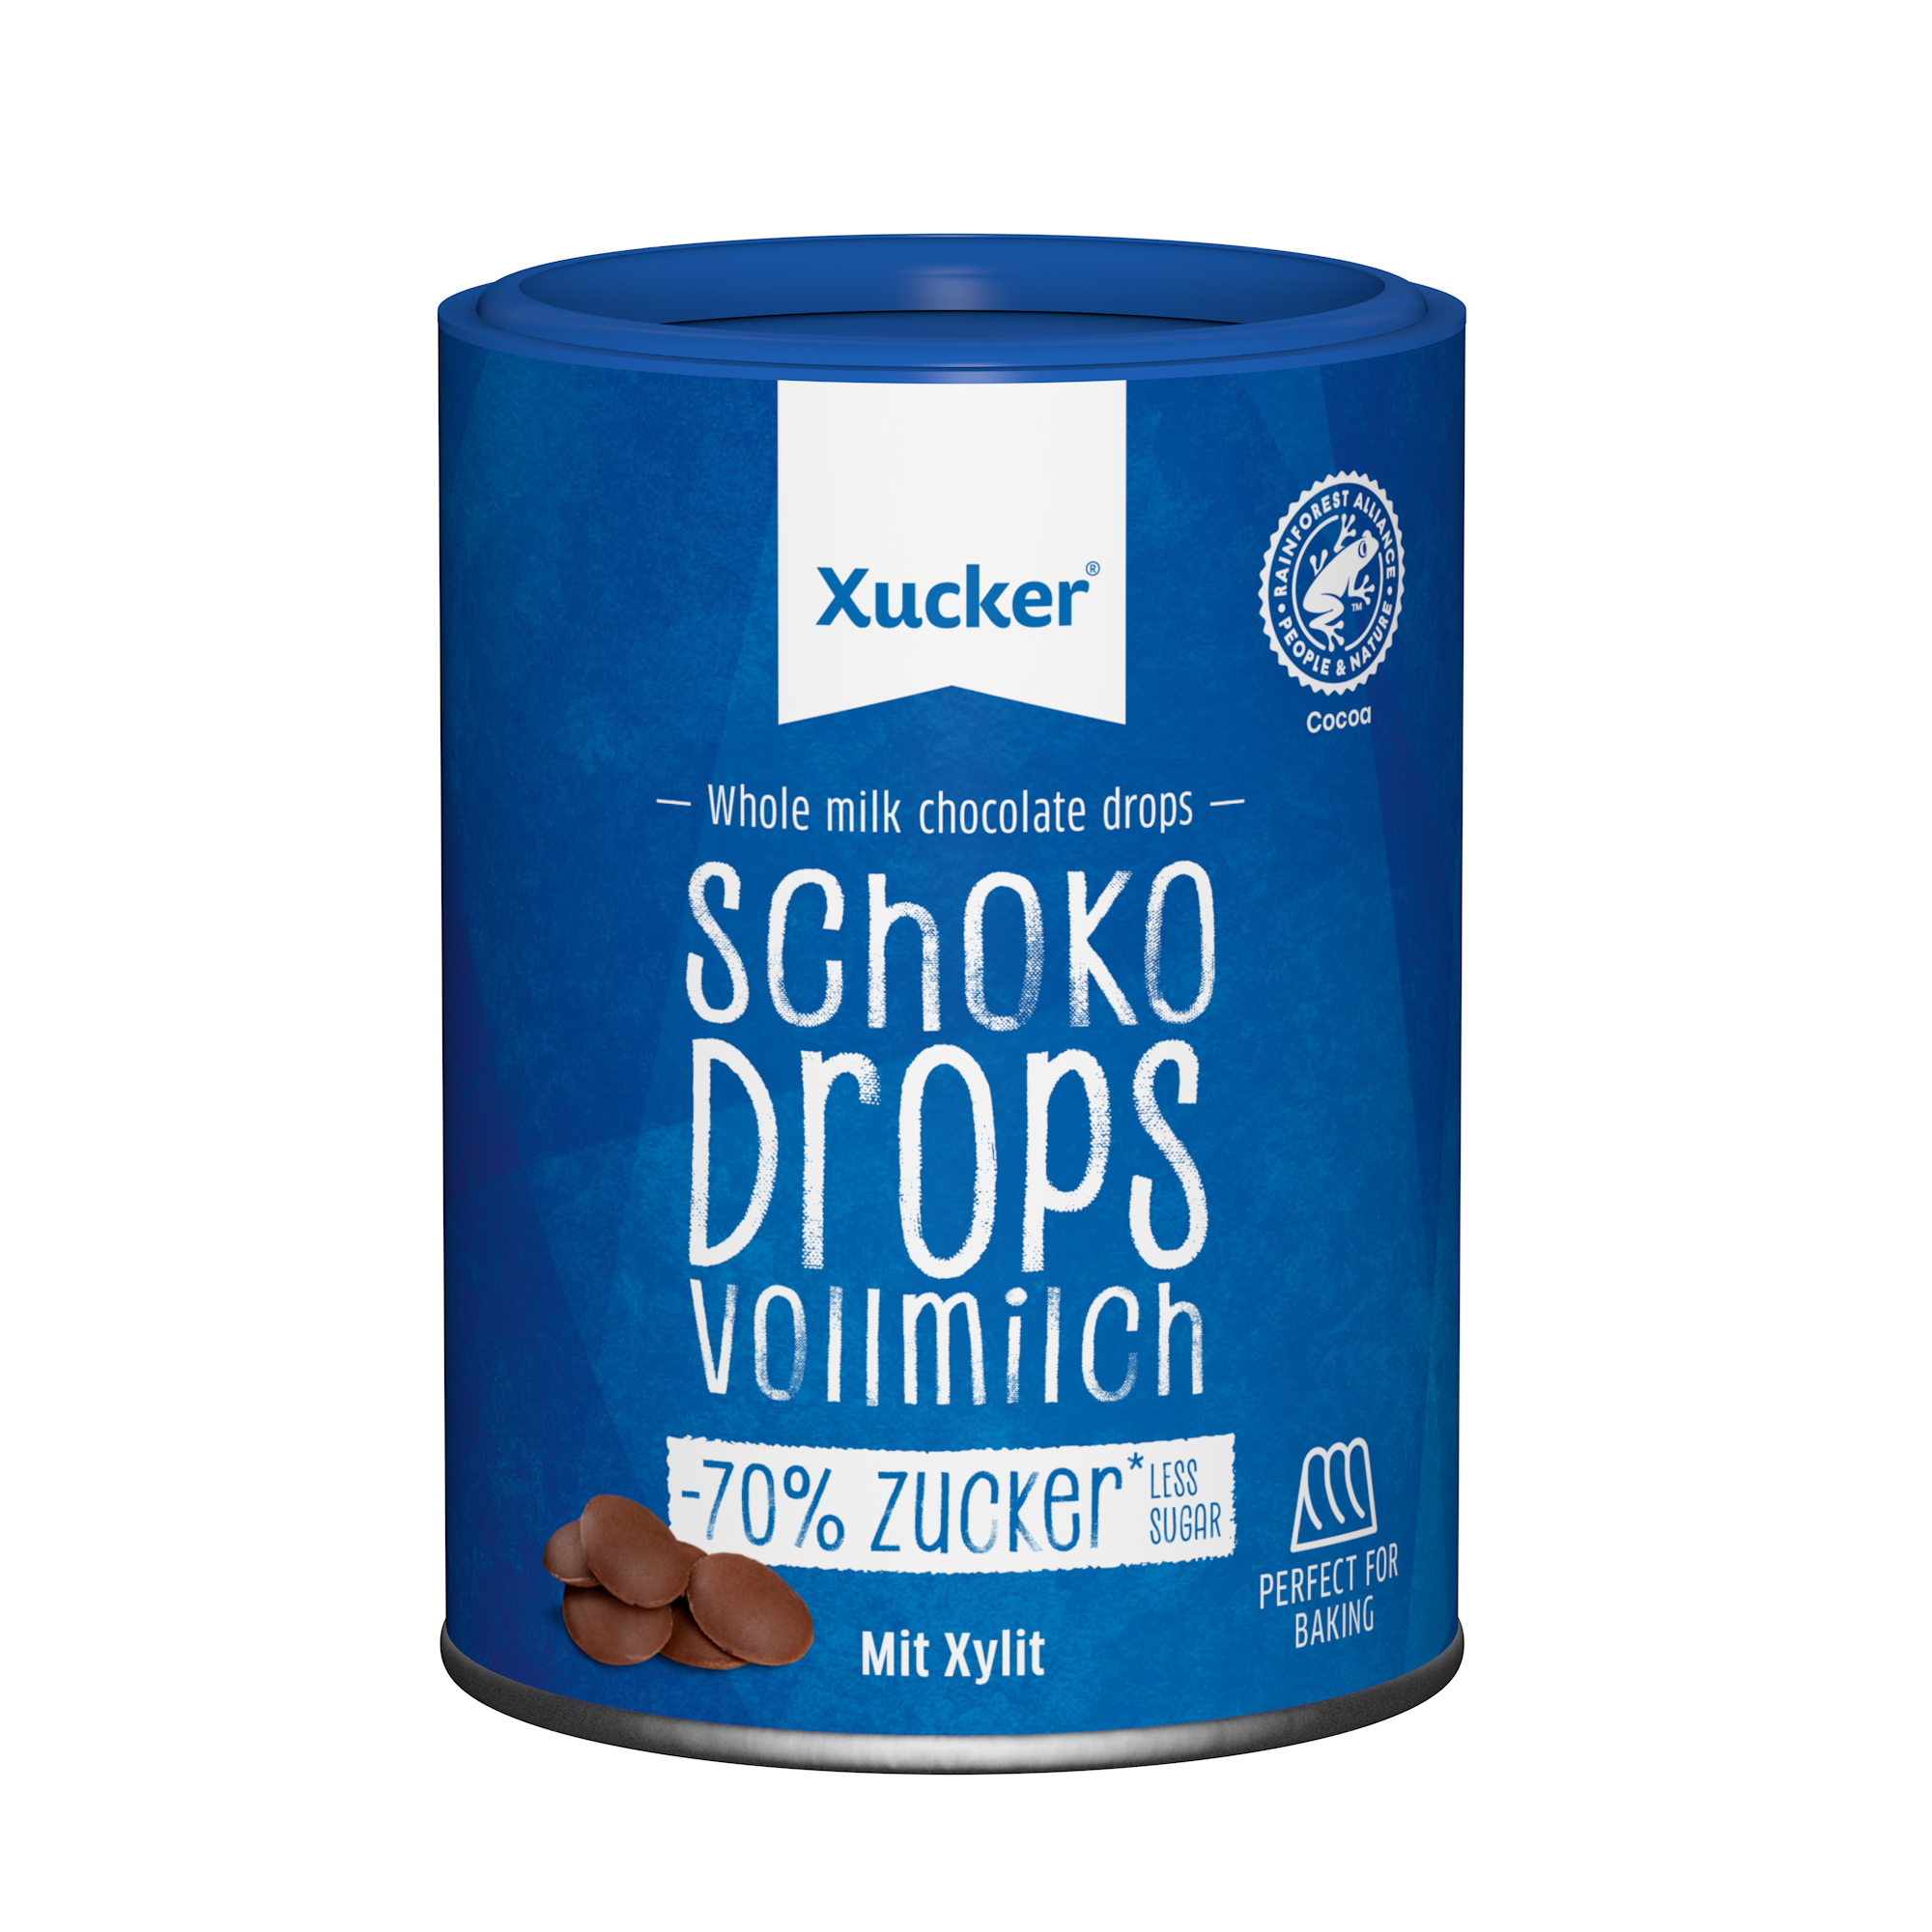 Xucker Schoko Drops Vollmilch 200g